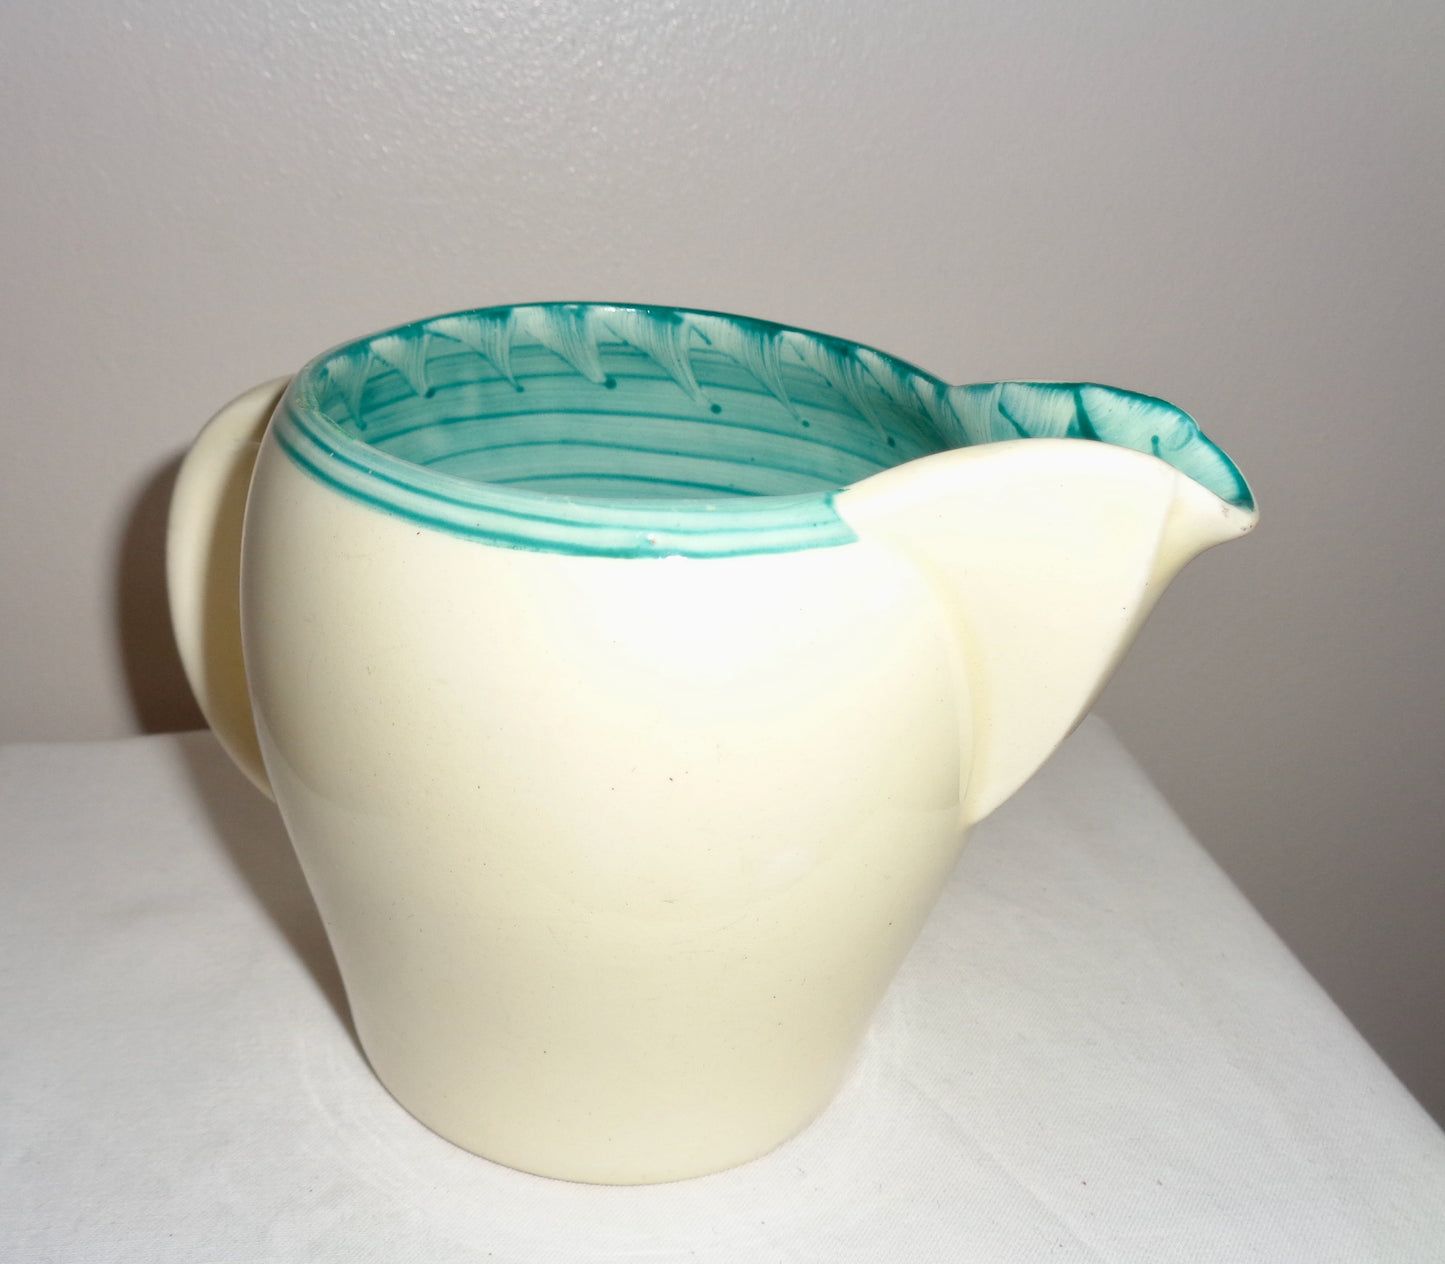 1930s Susie Cooper Kestrel Shape Ceramic Milk Jug 2176 With Sea Green Sgraffito Effect